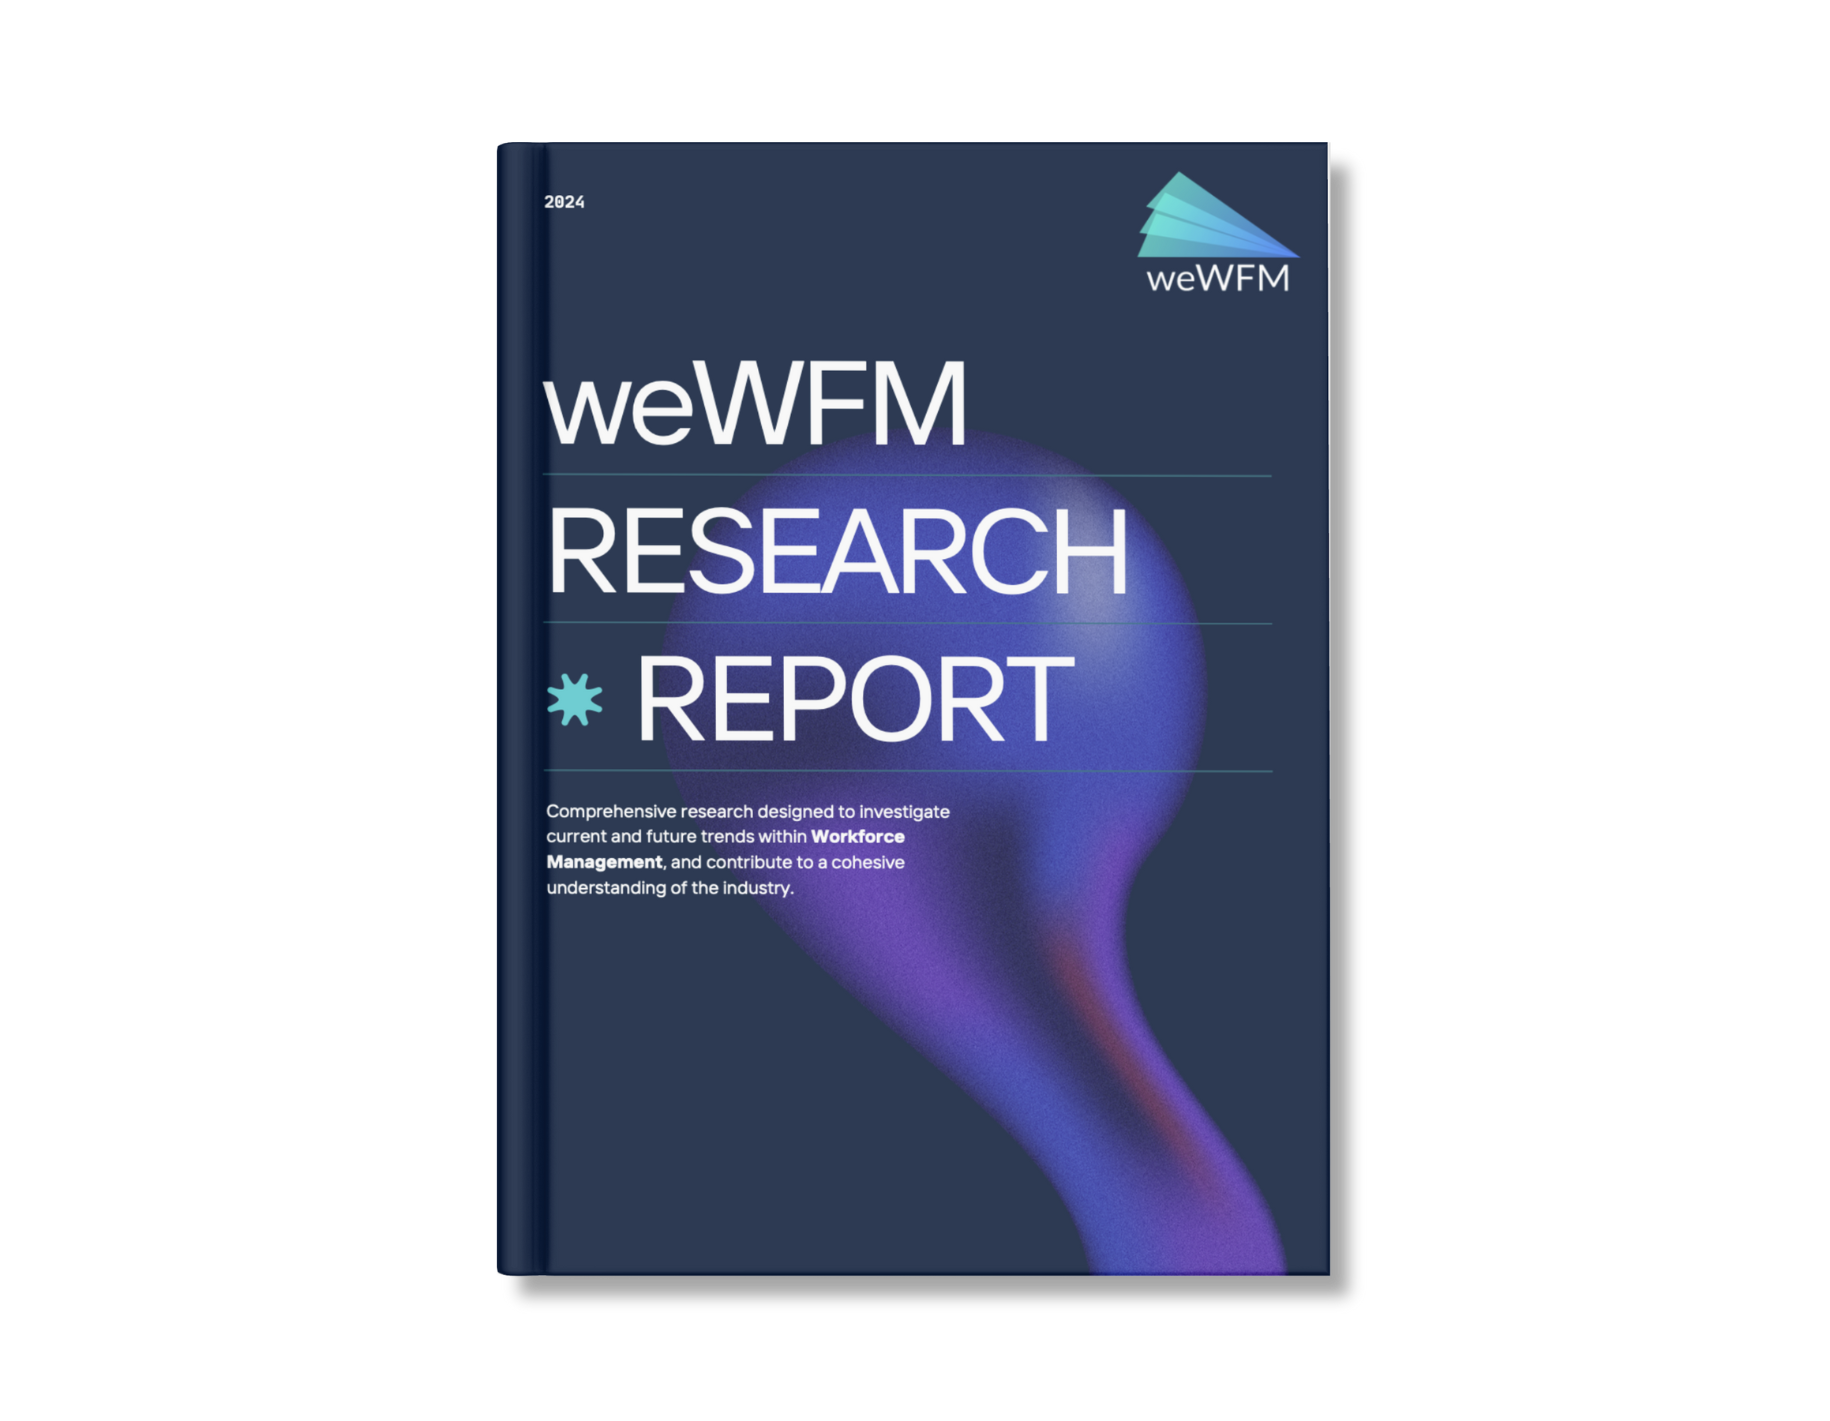 wewfm-report-ebook-mockup